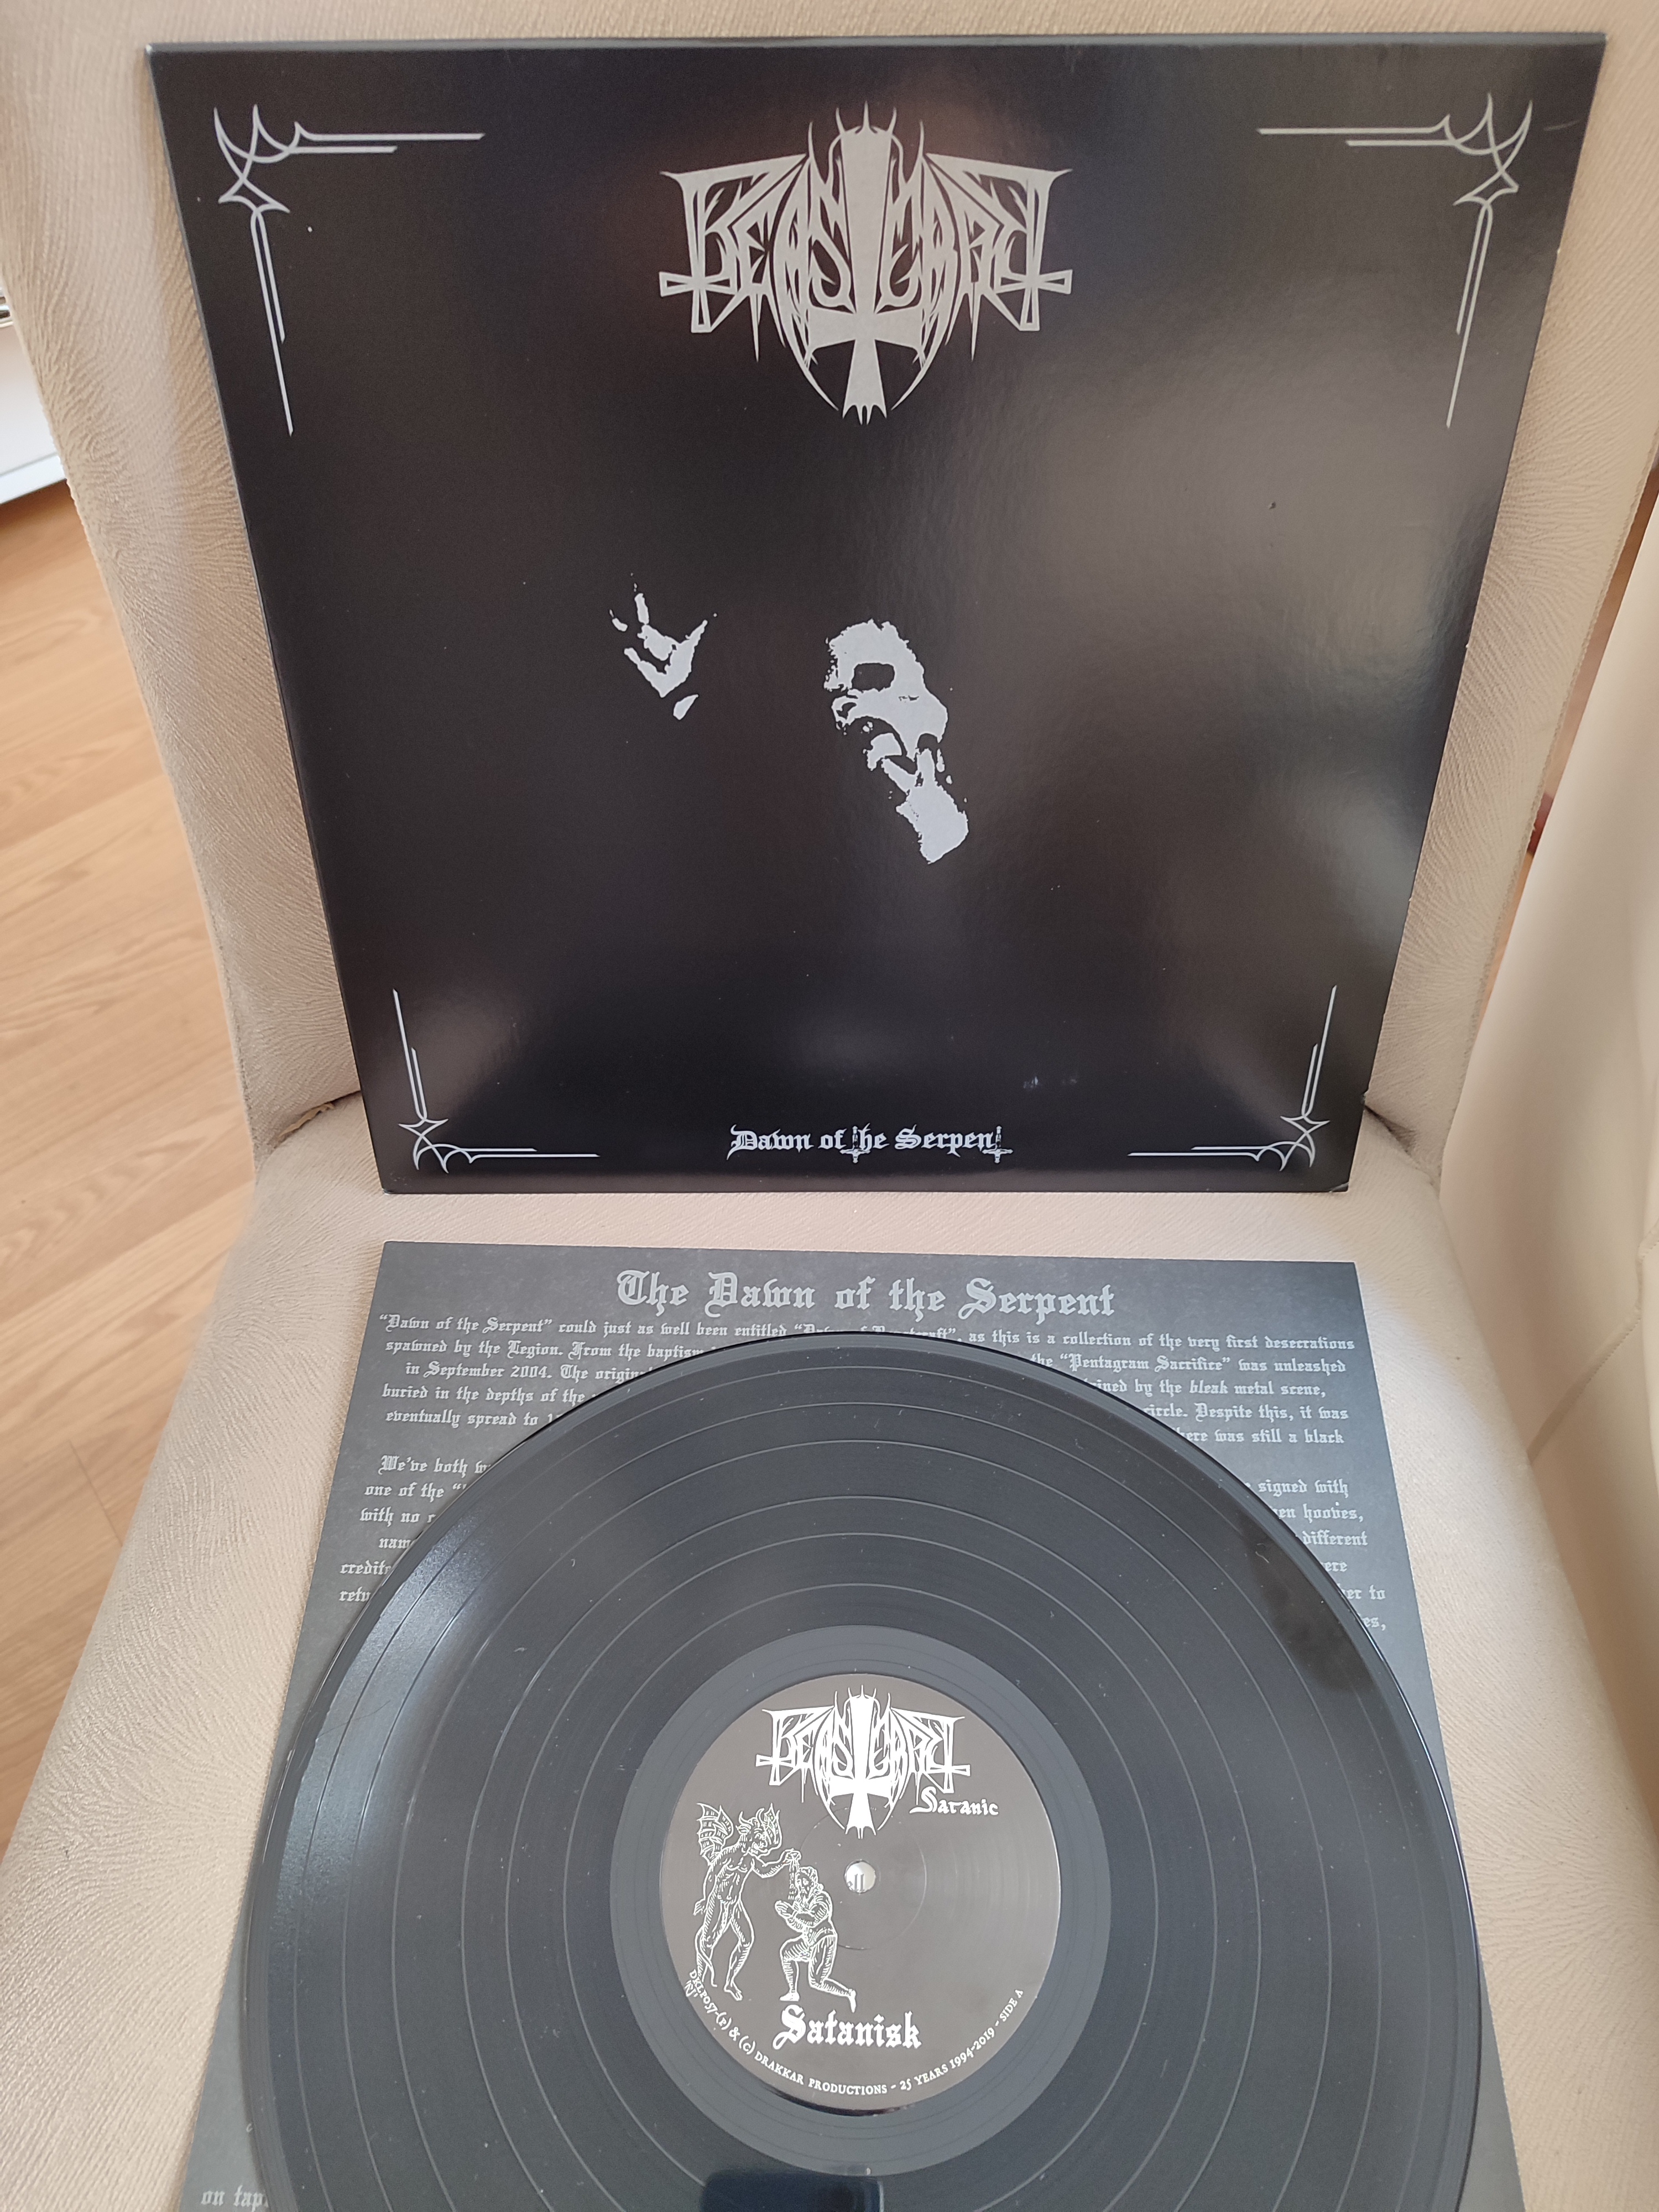 BEASTCRAFT – Dawn Of The Serpent - 2019 Fransa Basım 33 lük LP Plak - Black Metal - temiz 2. el